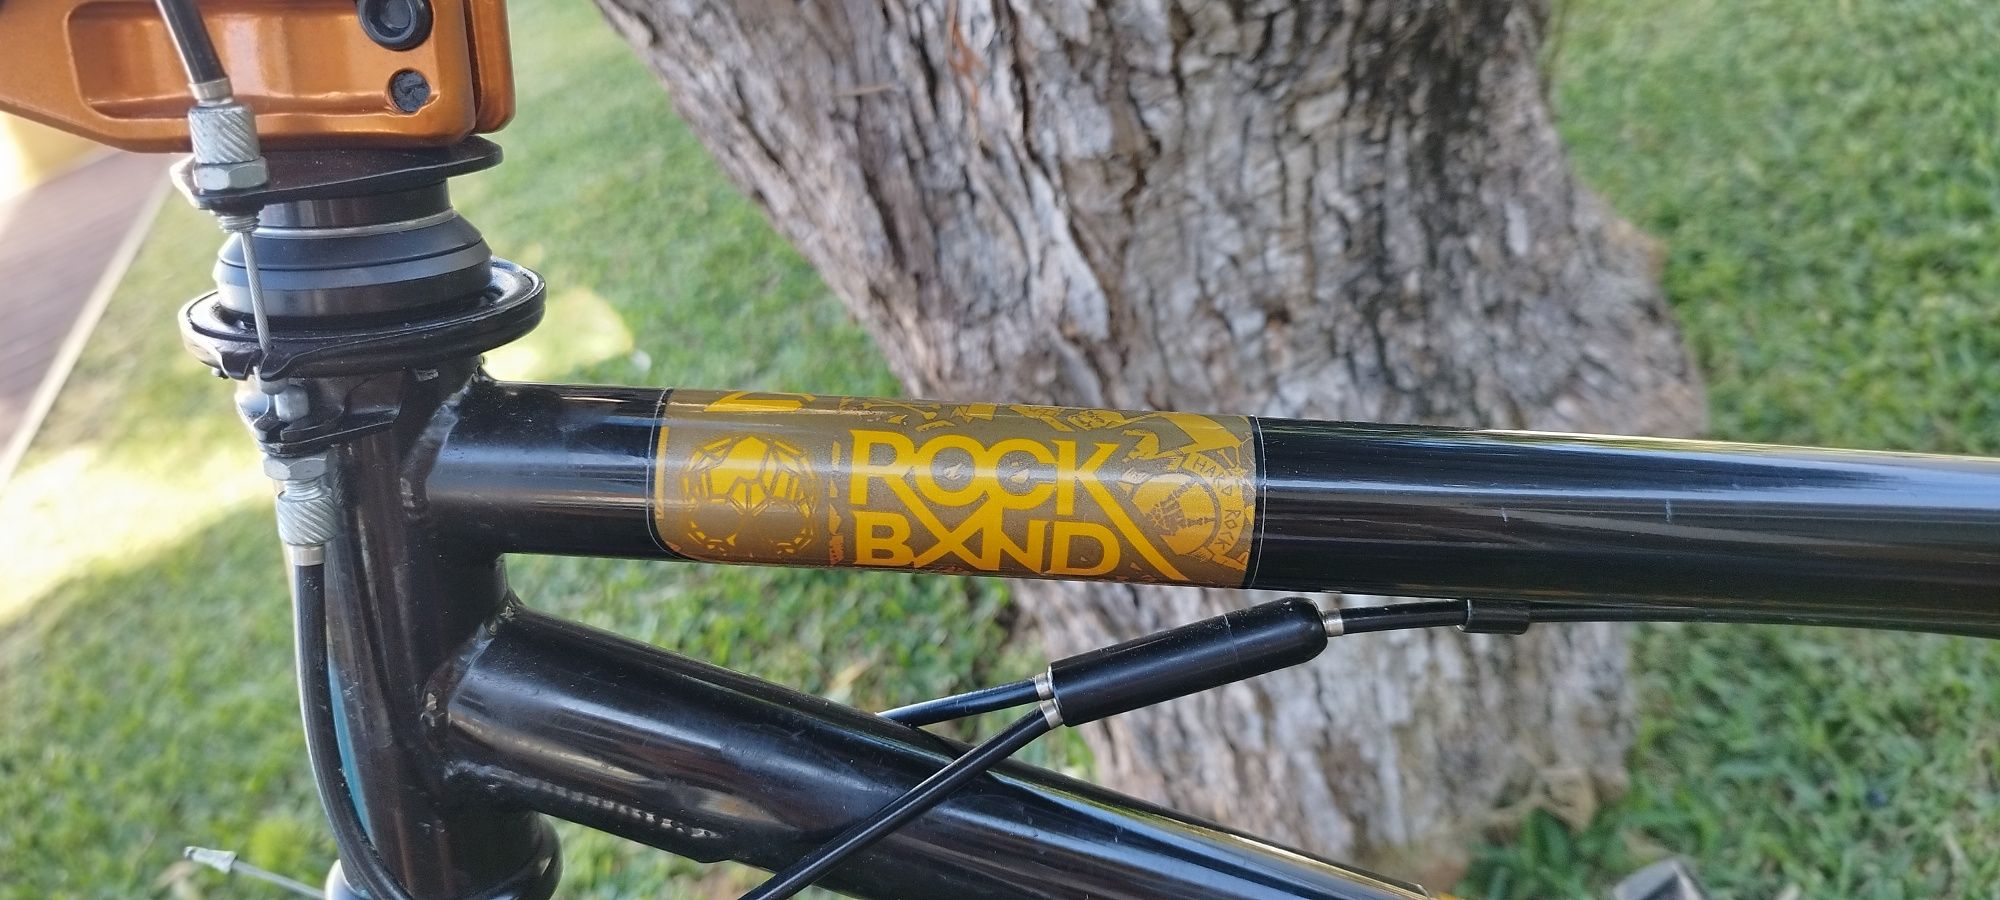 BMX Coluer Rockband